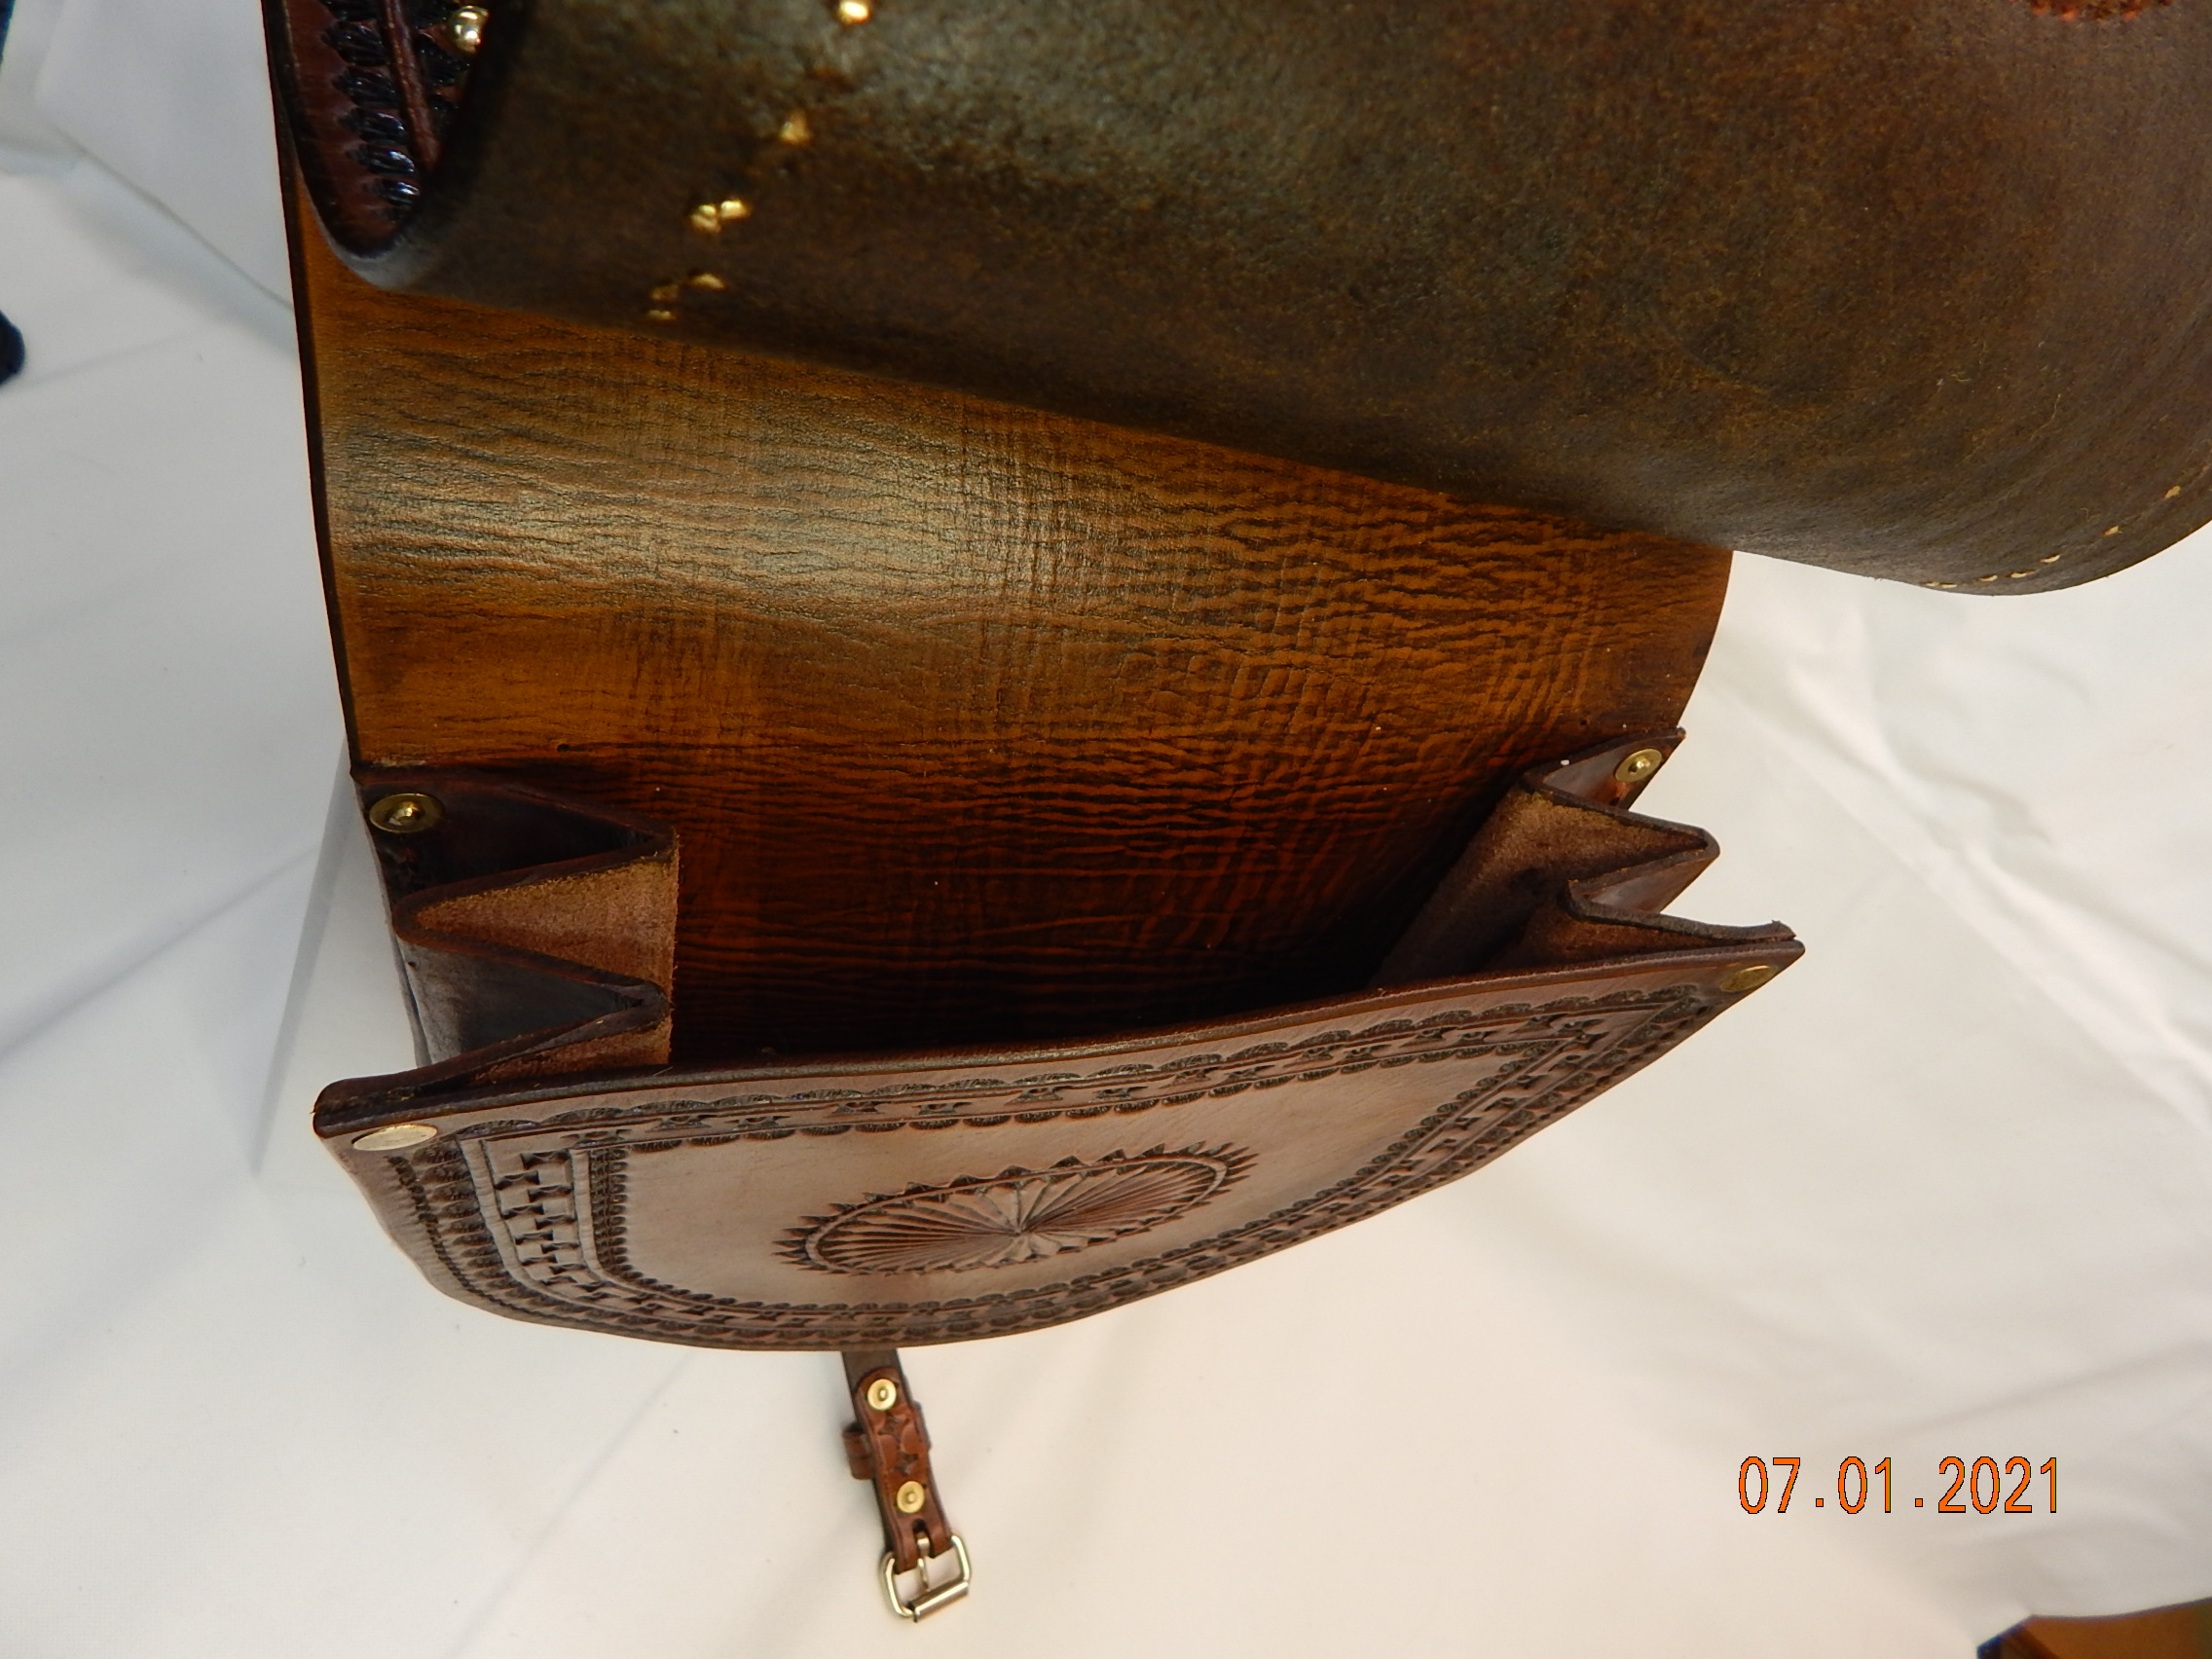 Leather Pommel Bags: Chamley Design